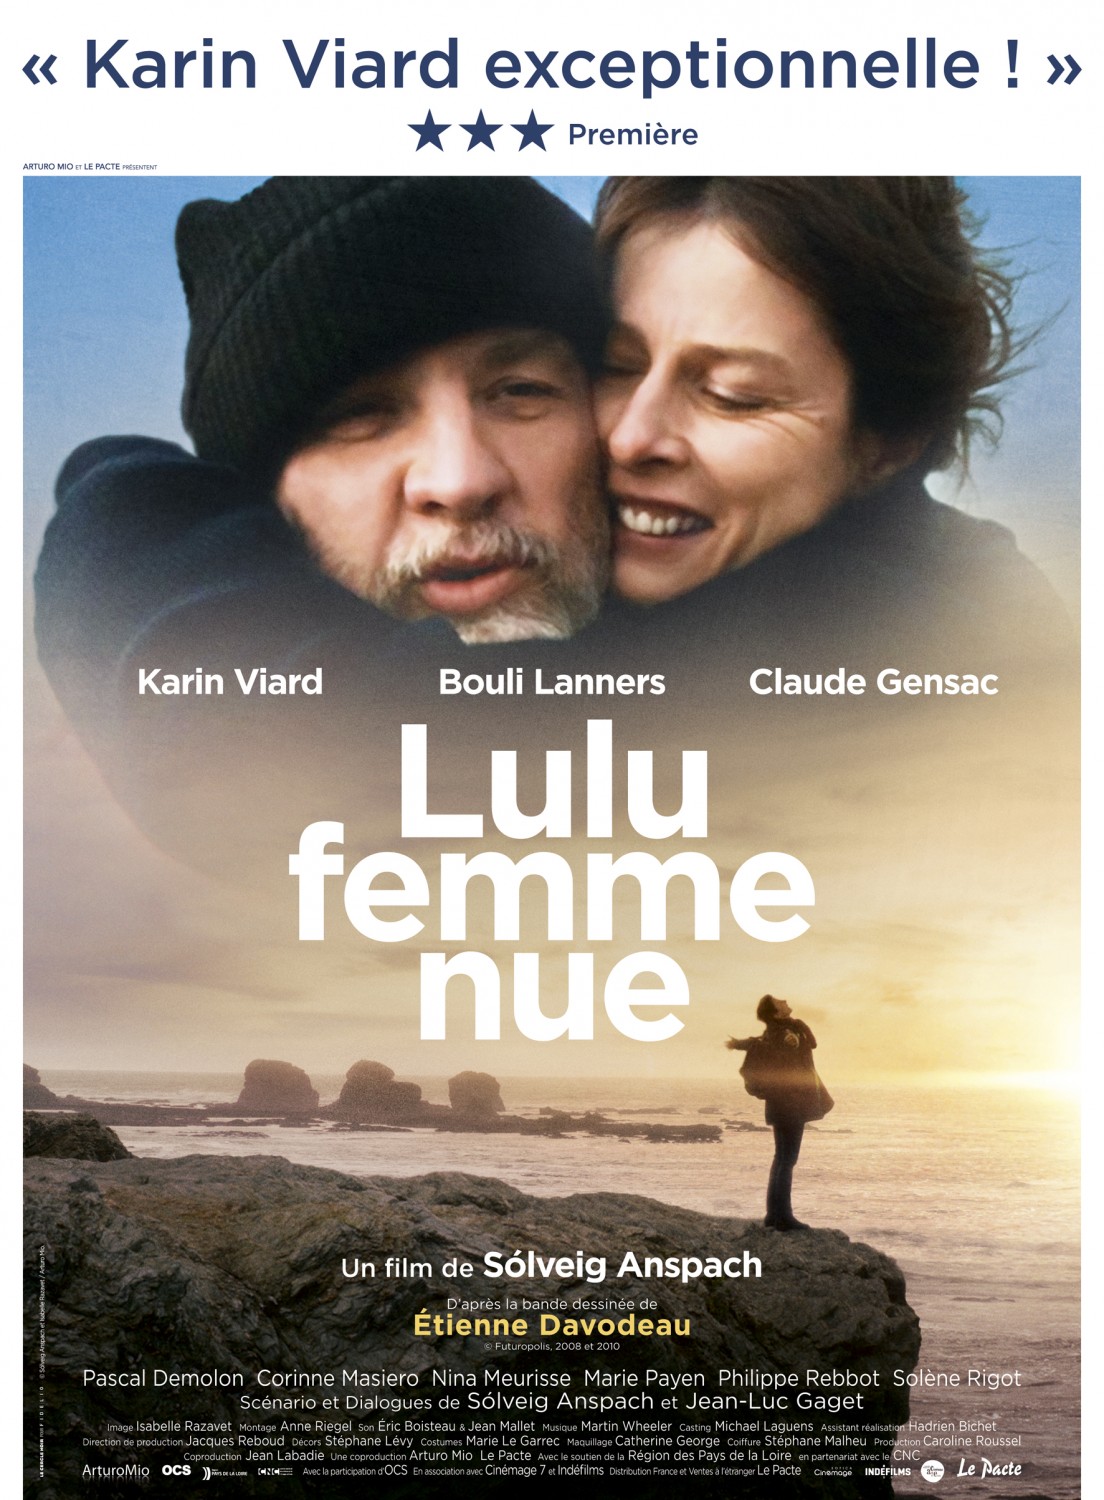 Extra Large Movie Poster Image for Lulu femme nue 